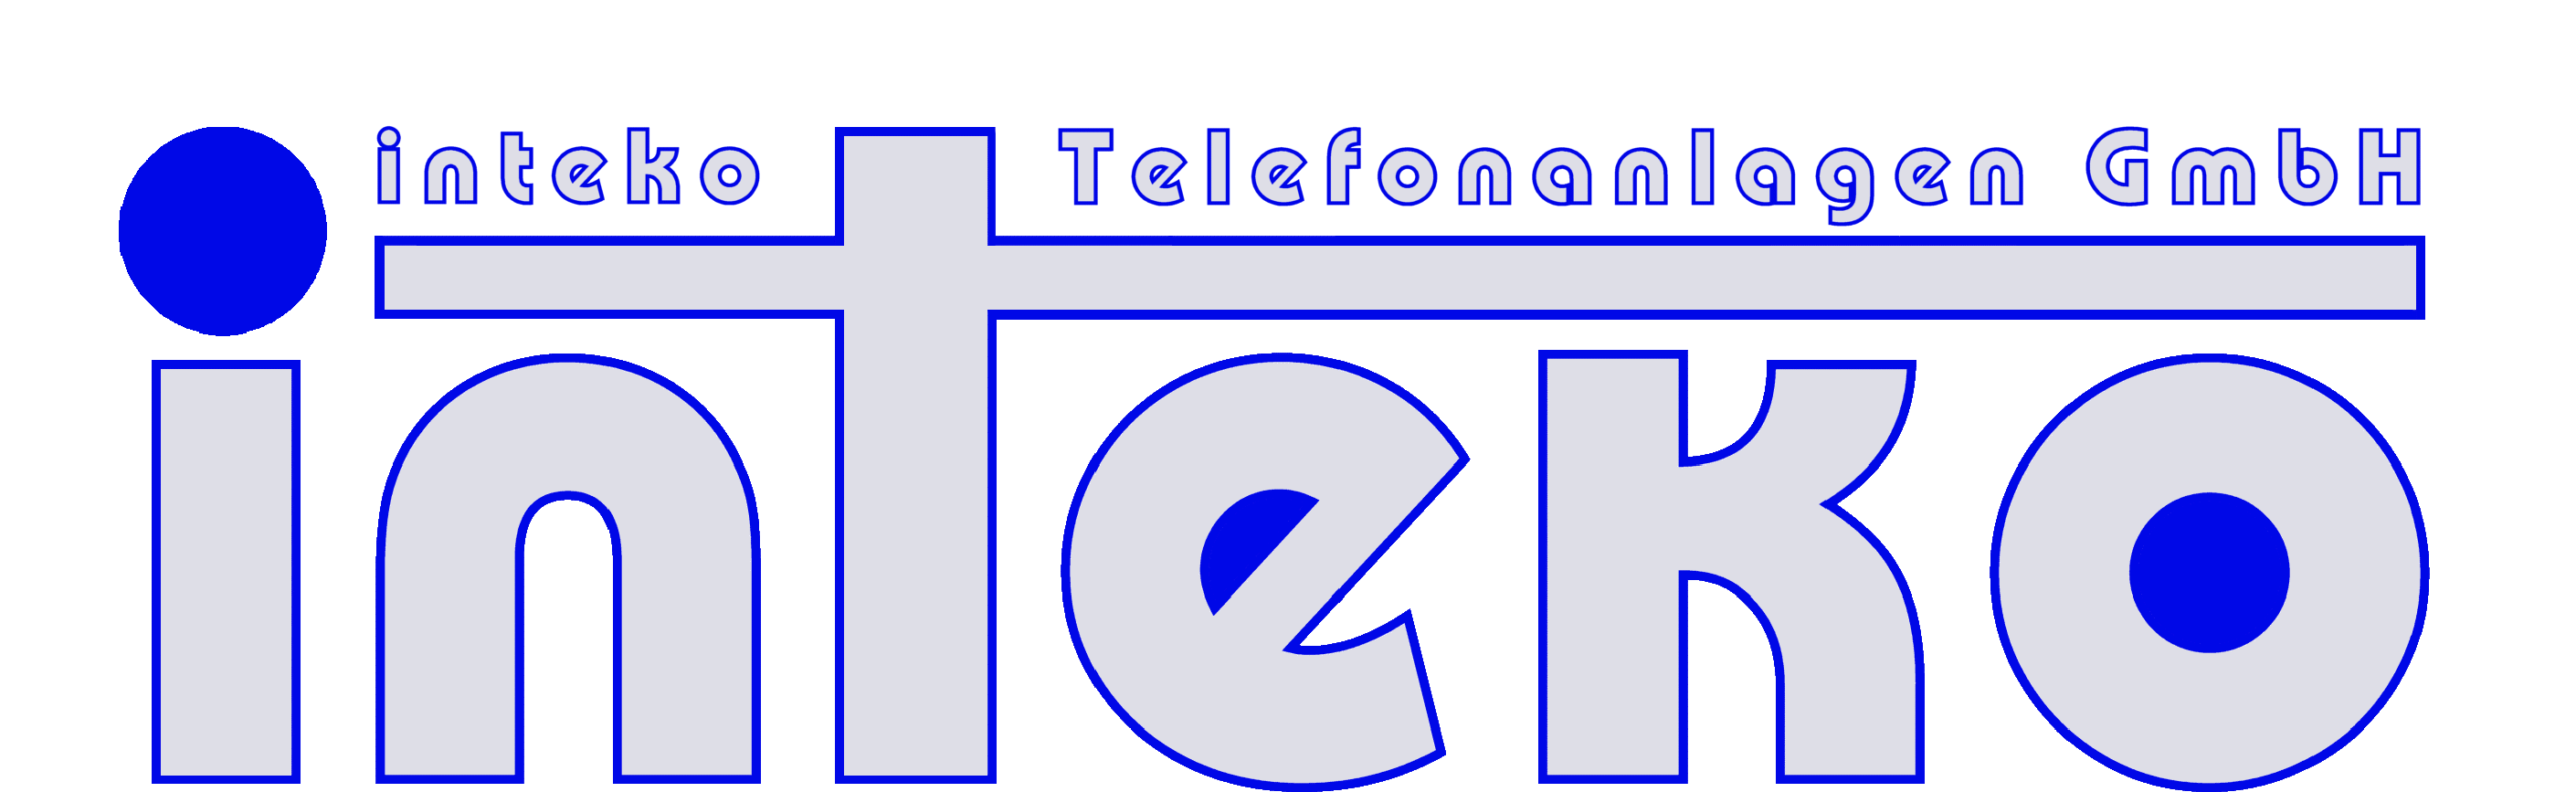 Telefonanlagen inteko Telefonanlagen GmbH